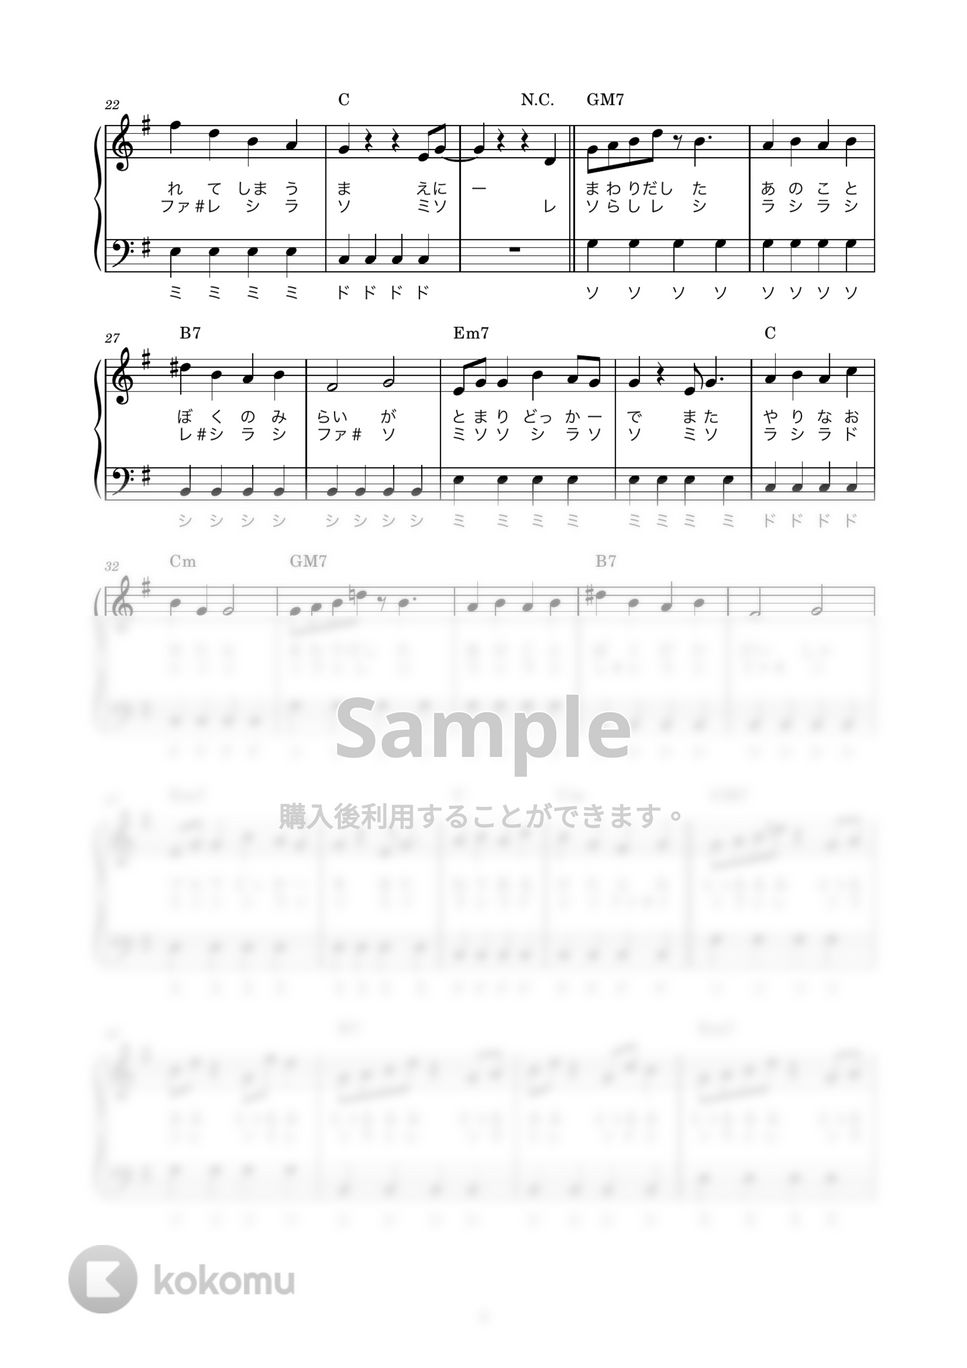 Vaundy - 踊り子 (かんたん / 歌詞付き / ドレミ付き / 初心者) by piano.tokyo